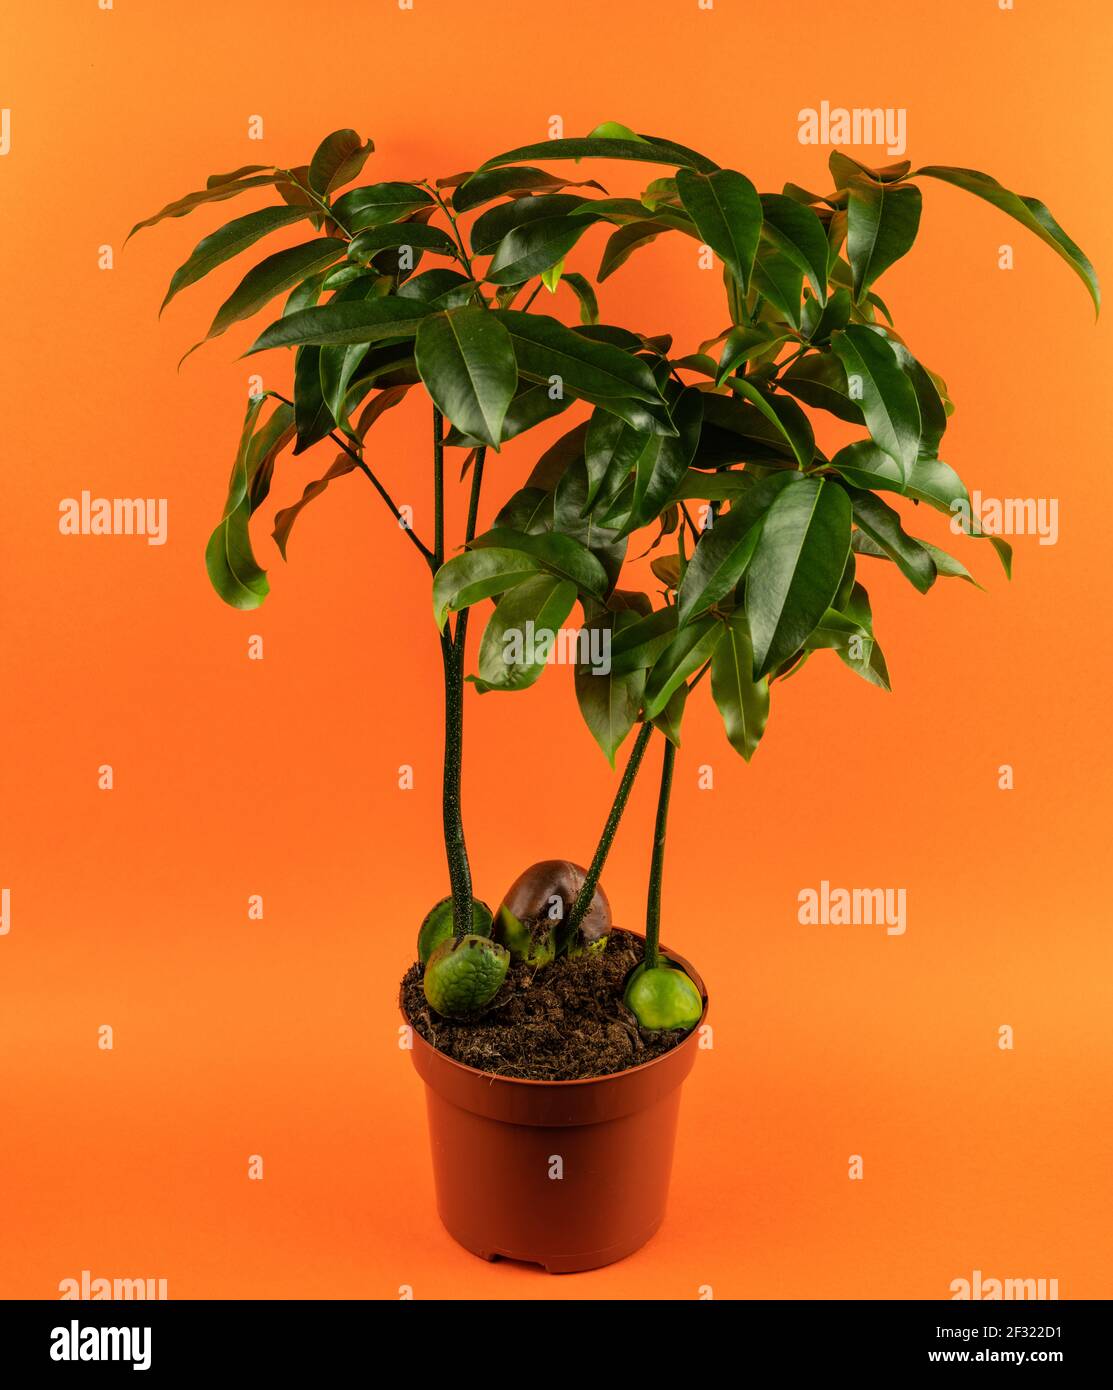 Castanospermum australe in pot with orange background, top view Stock Photo